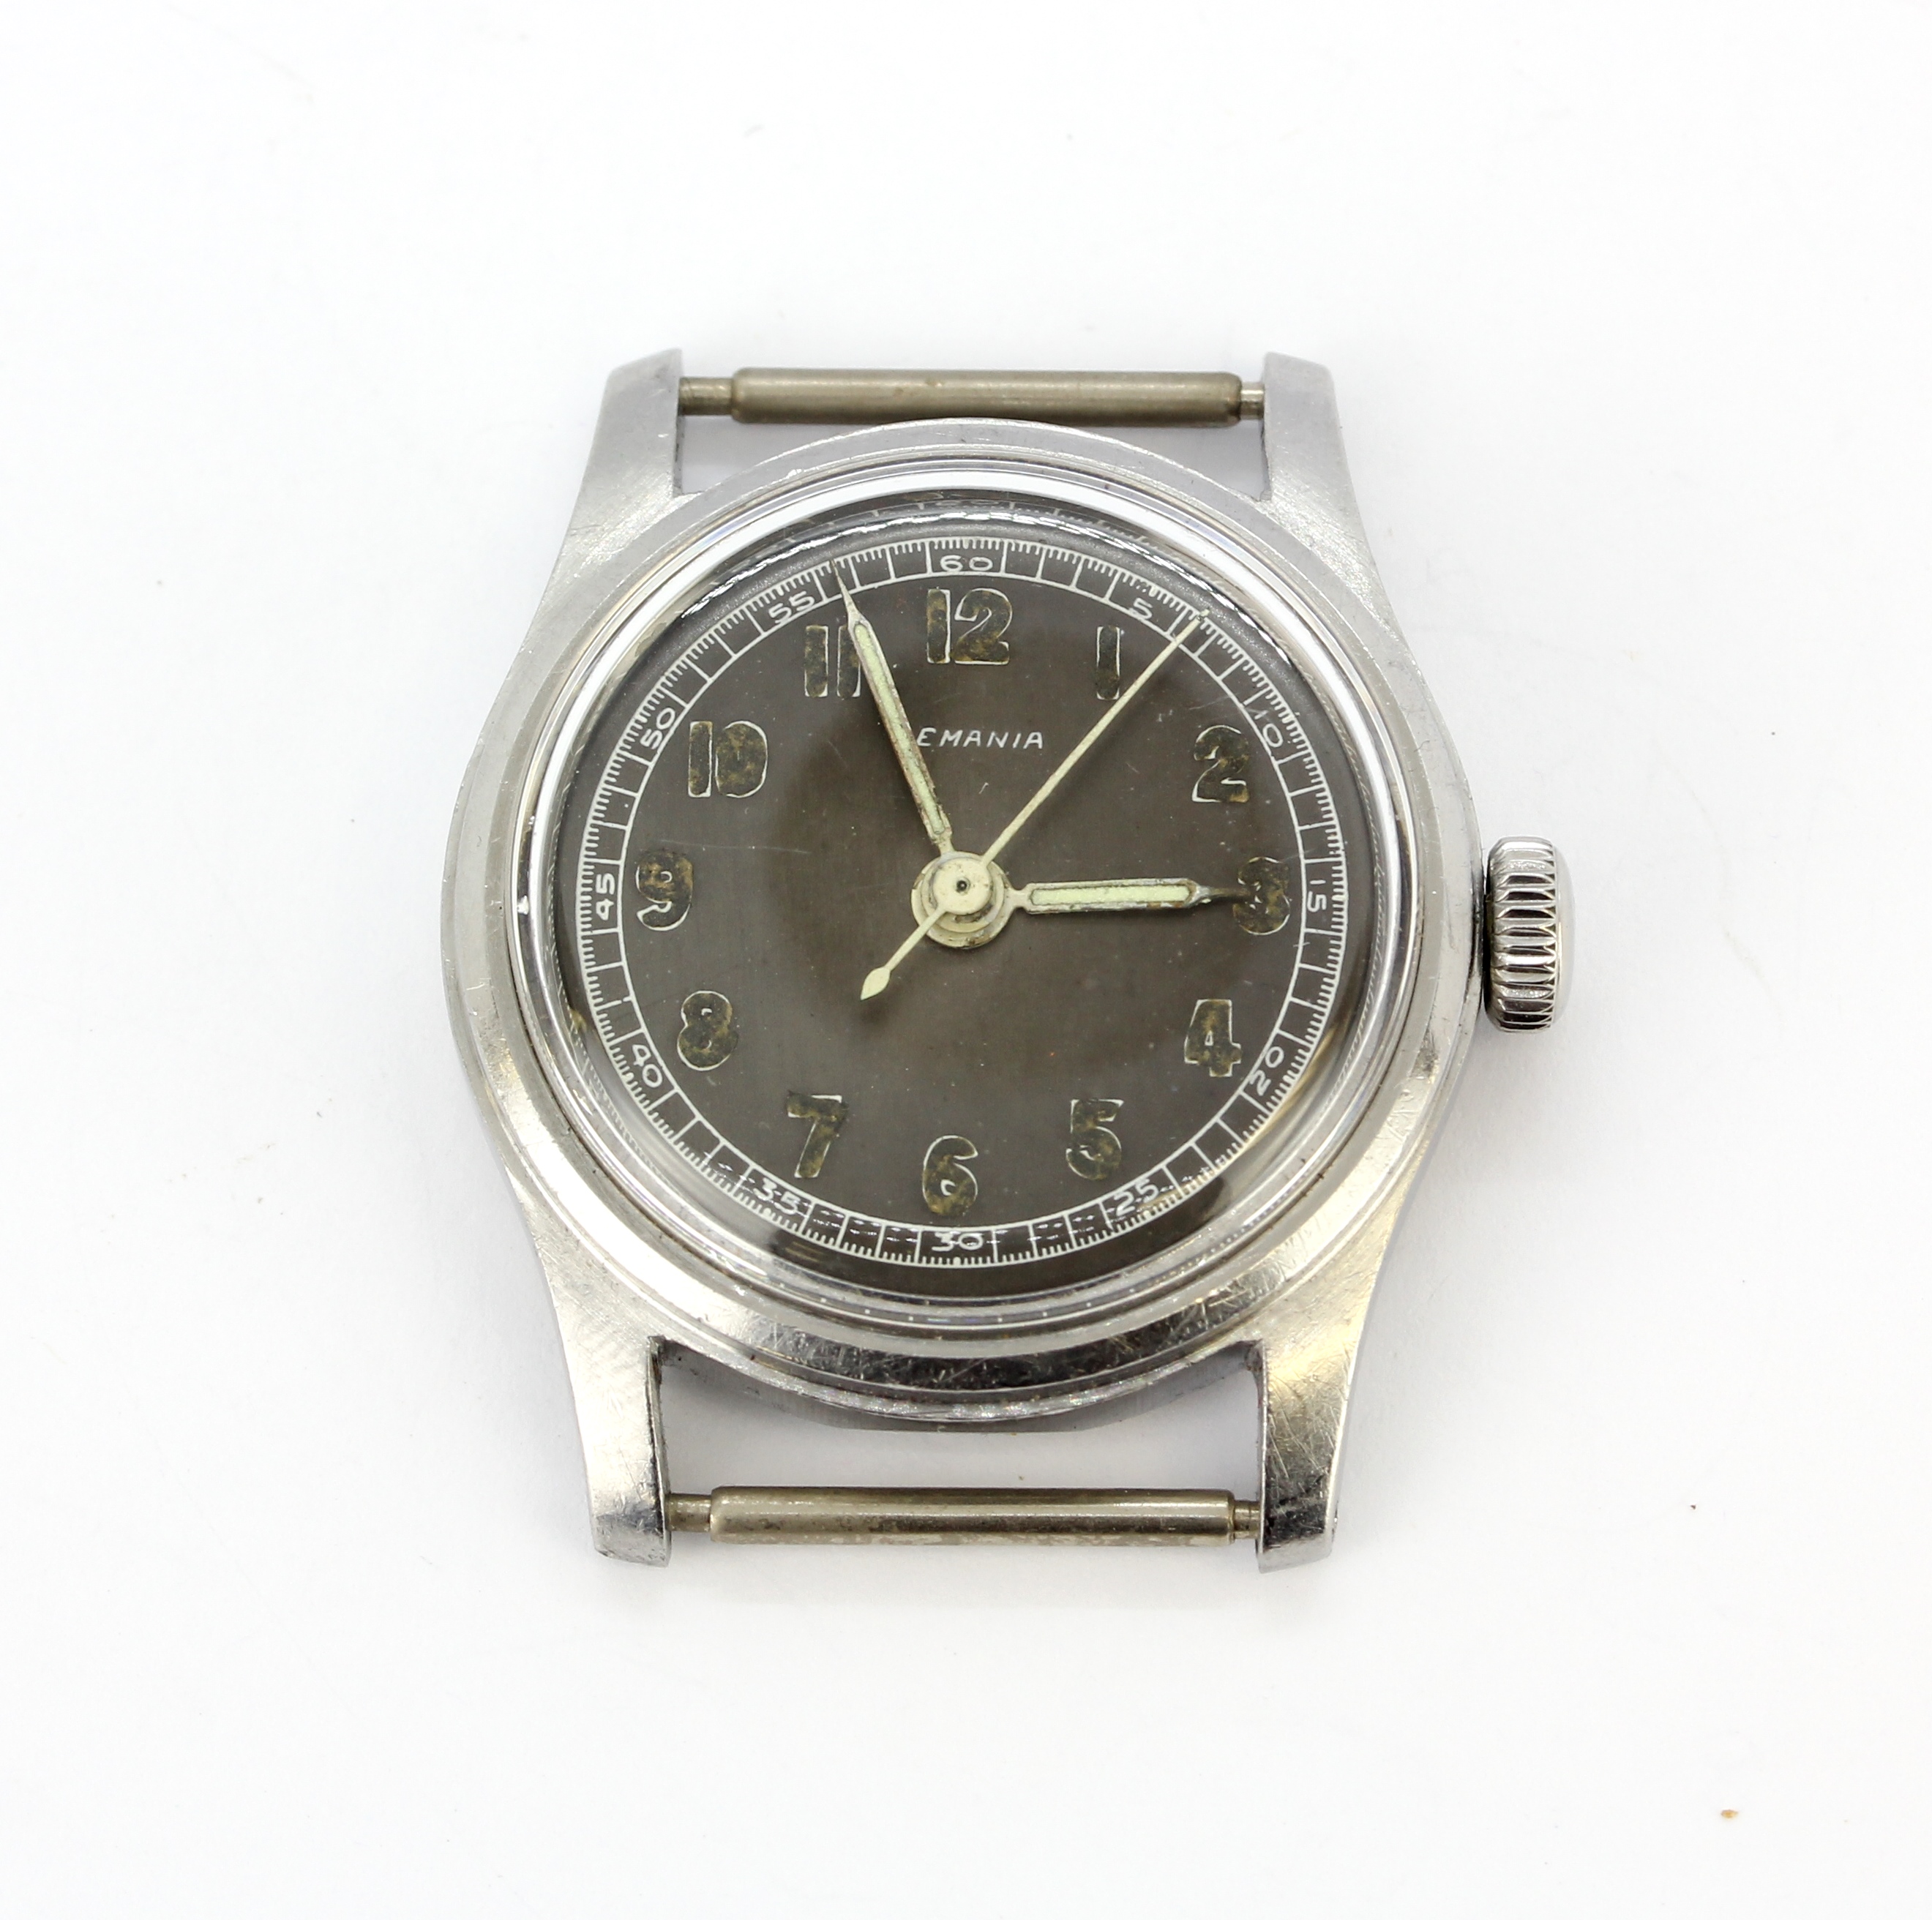 A military issue Swiss Lemania wrist watch.